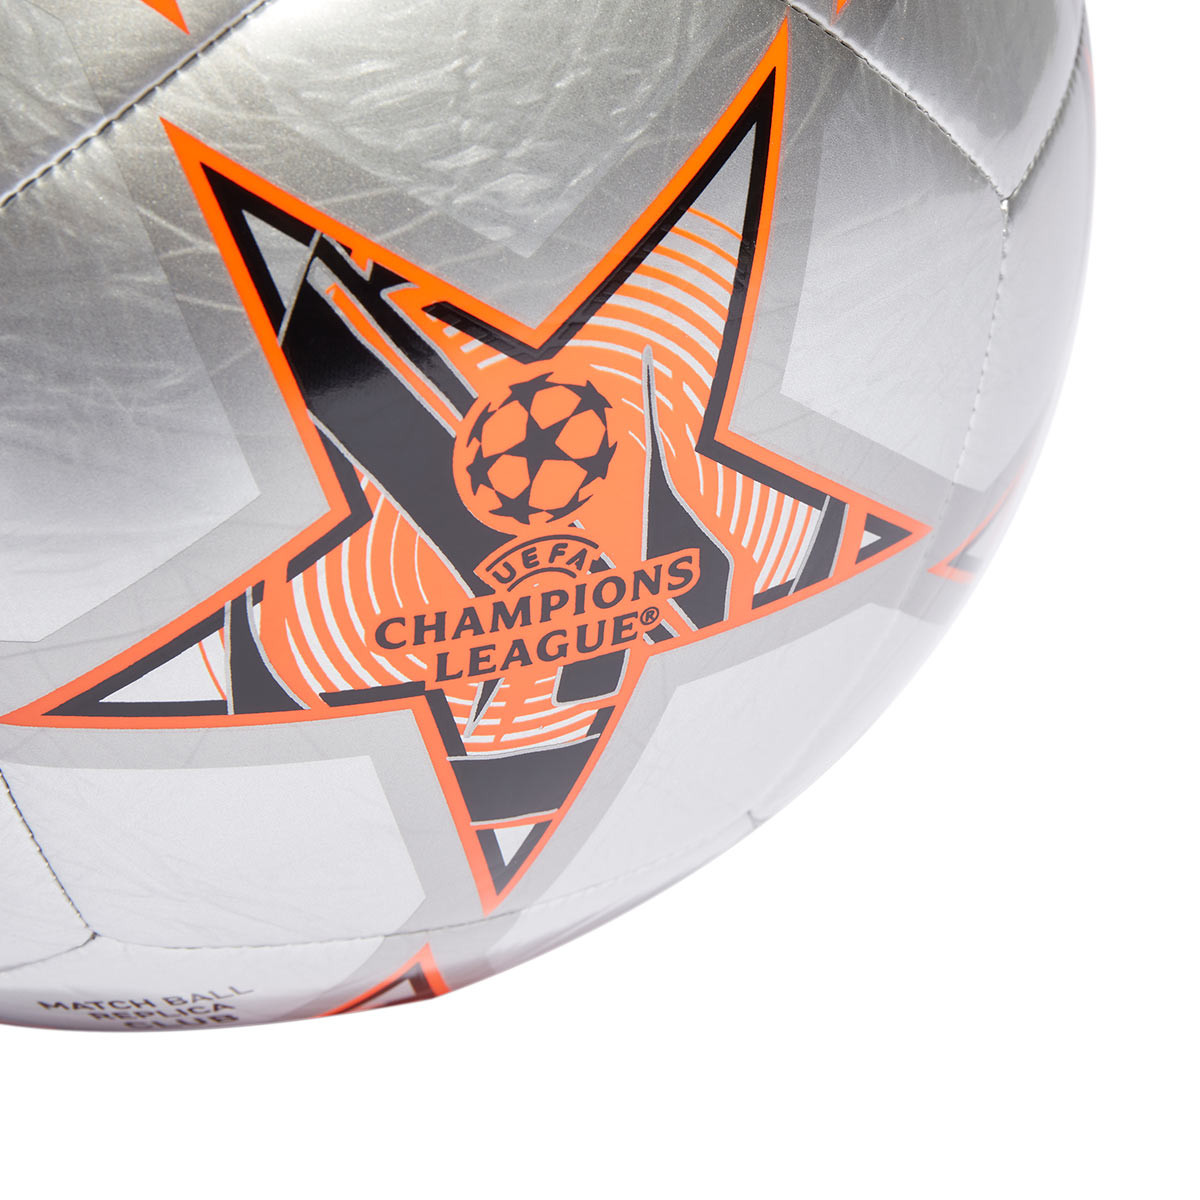 Adidas apresenta bolas oficiais da Champions League Masculina e Feminina  2023/2024